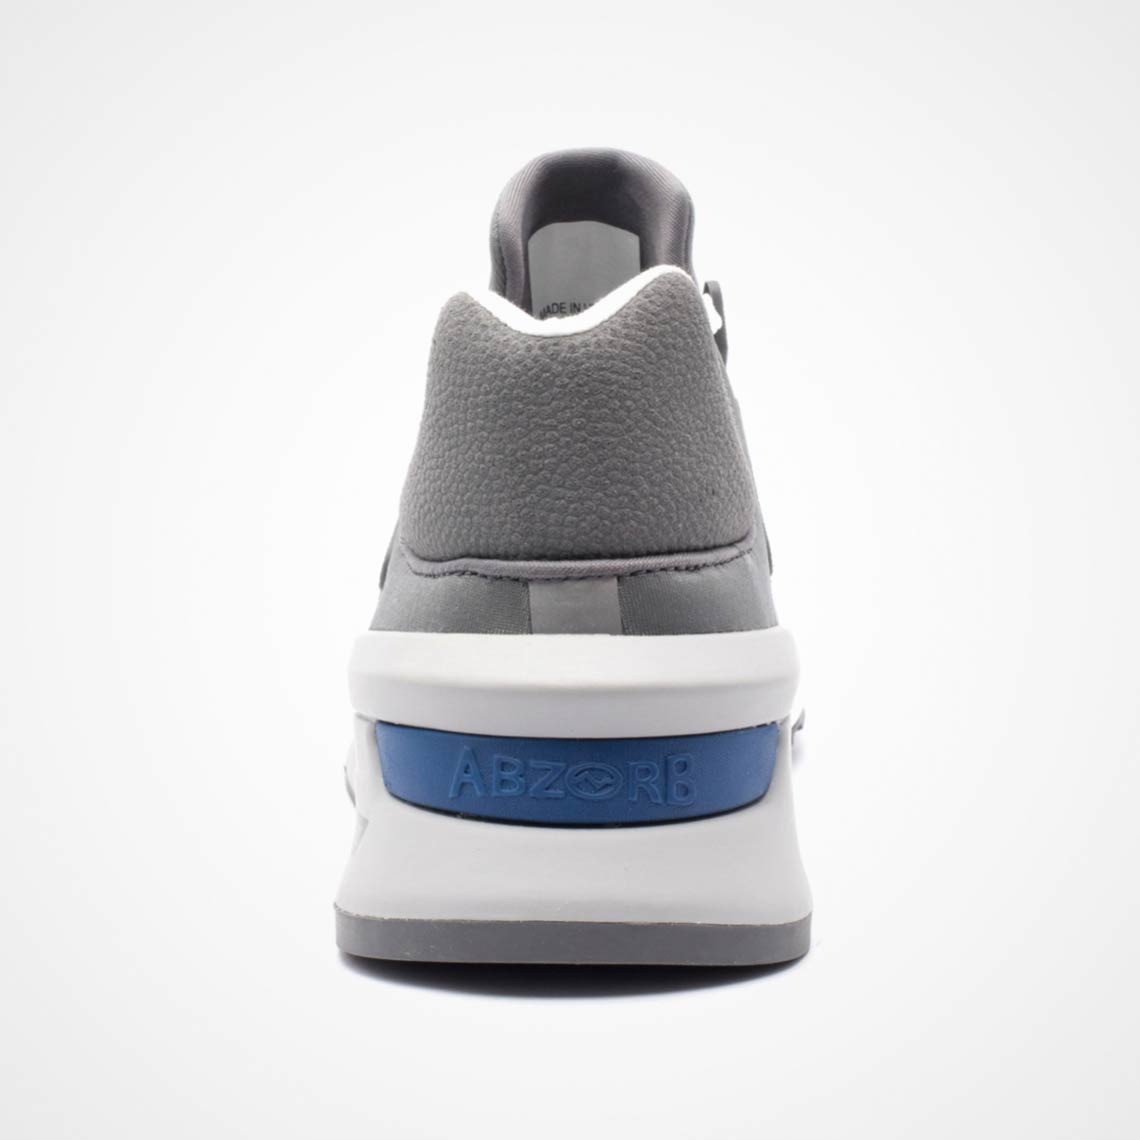 adidas originals Stan Smith CREAMWHITE Shoes Unisex Leisure Skate Wear-resistant GW1391s Grey Ms997hgc 6